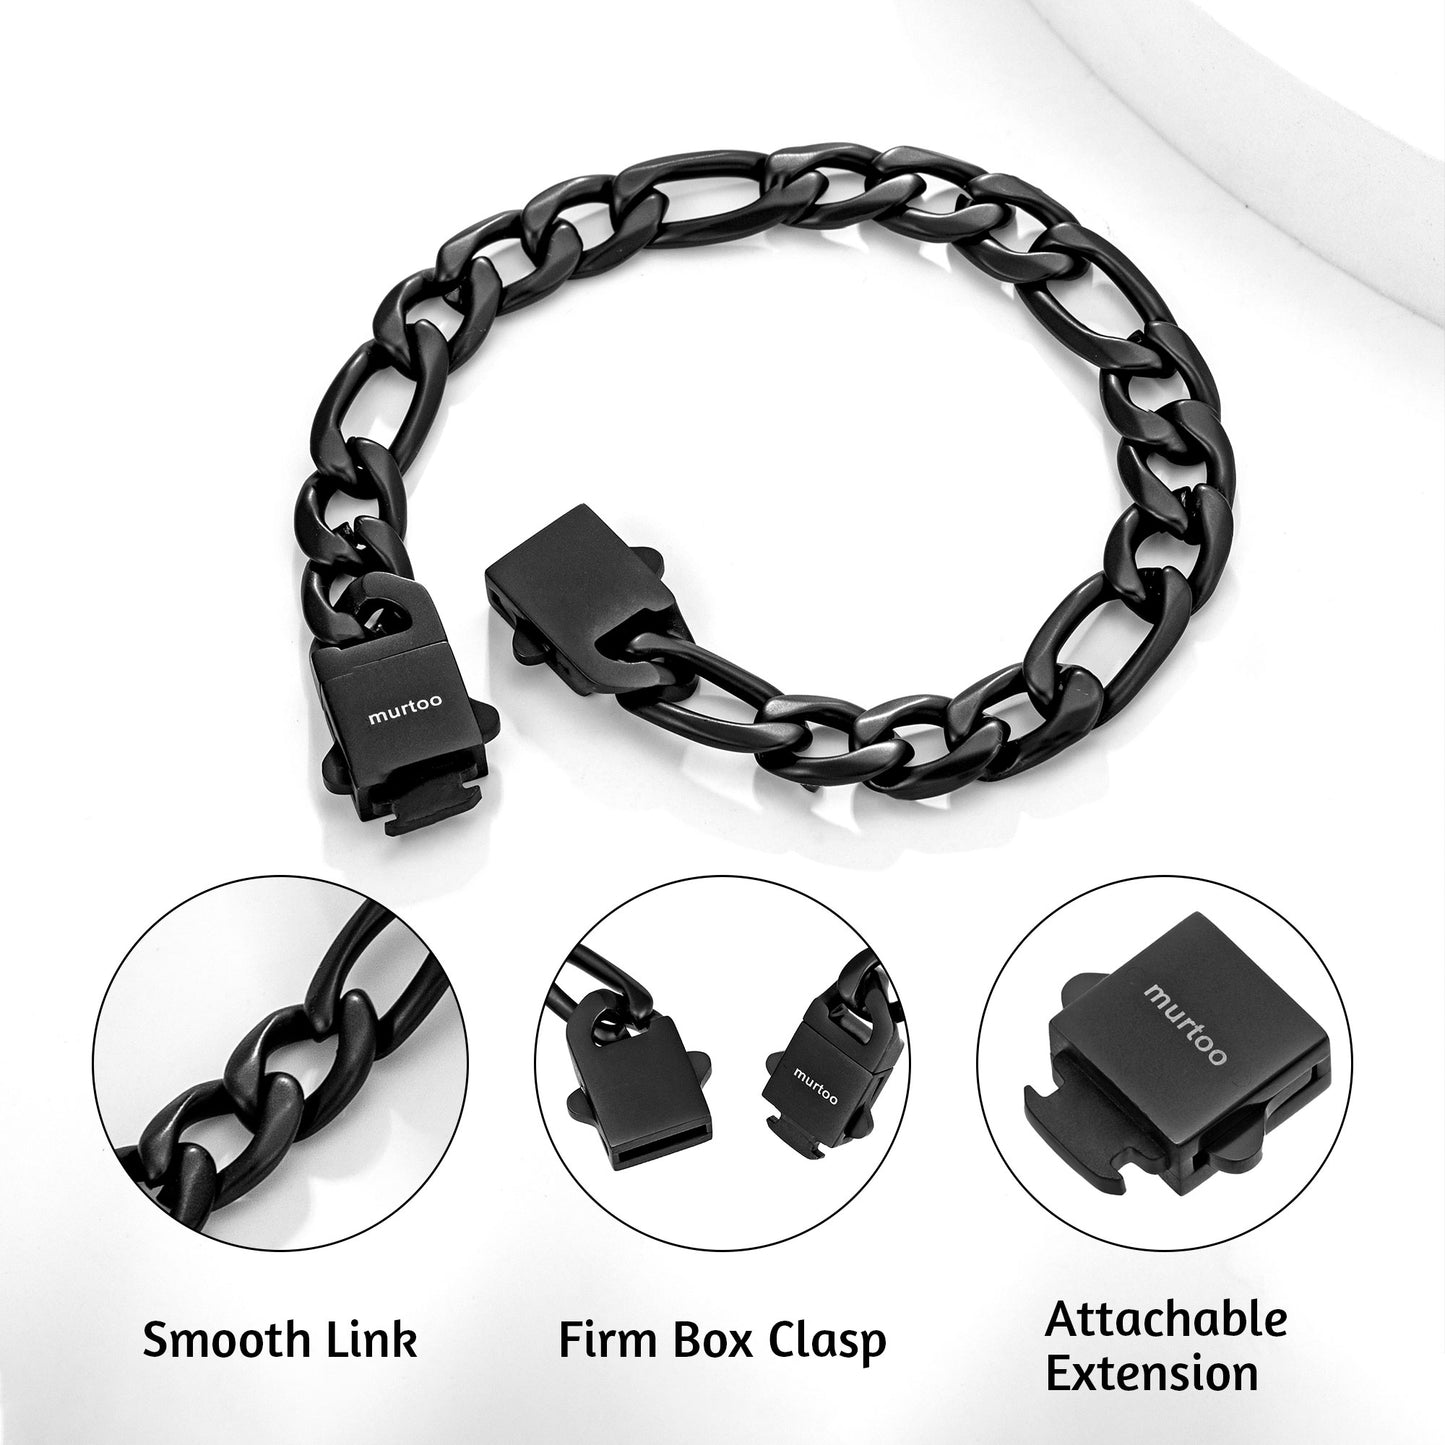 10mm steel bracelet BHR00290